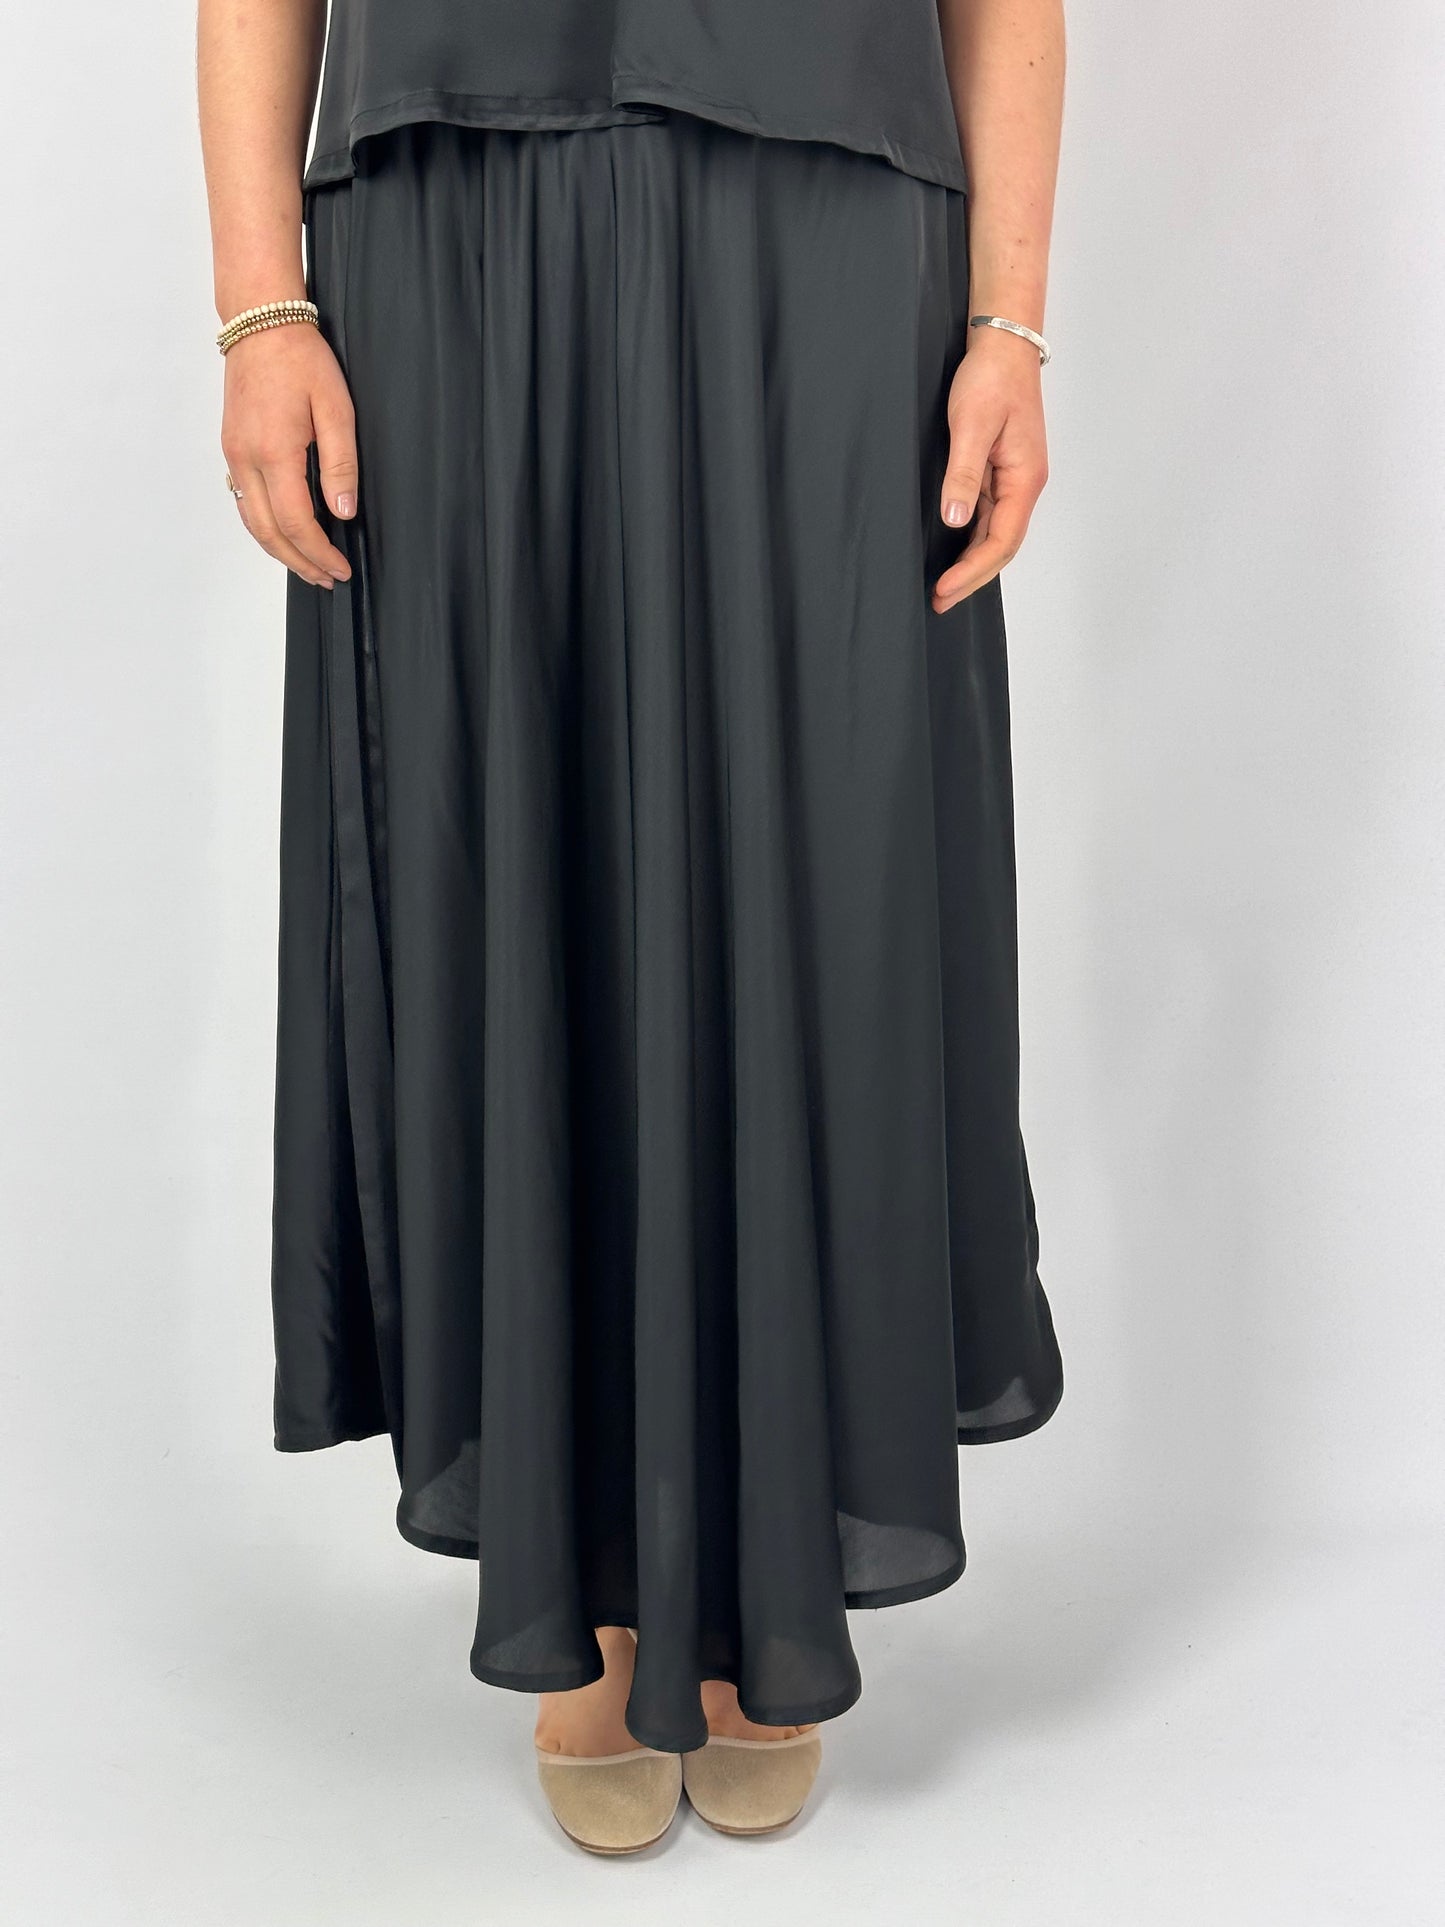 LFDA 616 Skirt Black